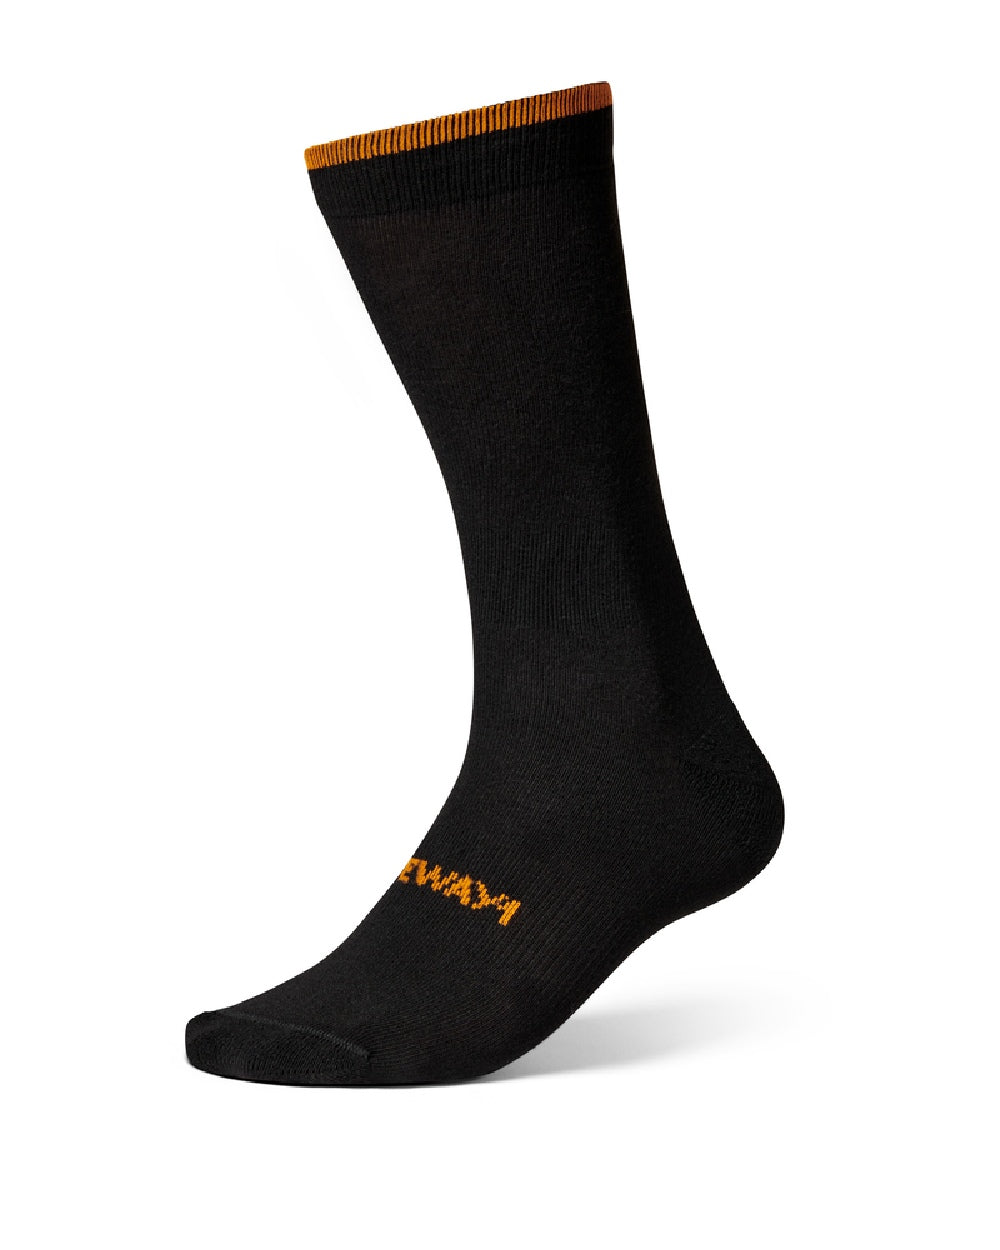 GateWay 1 Coolmax Liner Sock in Black